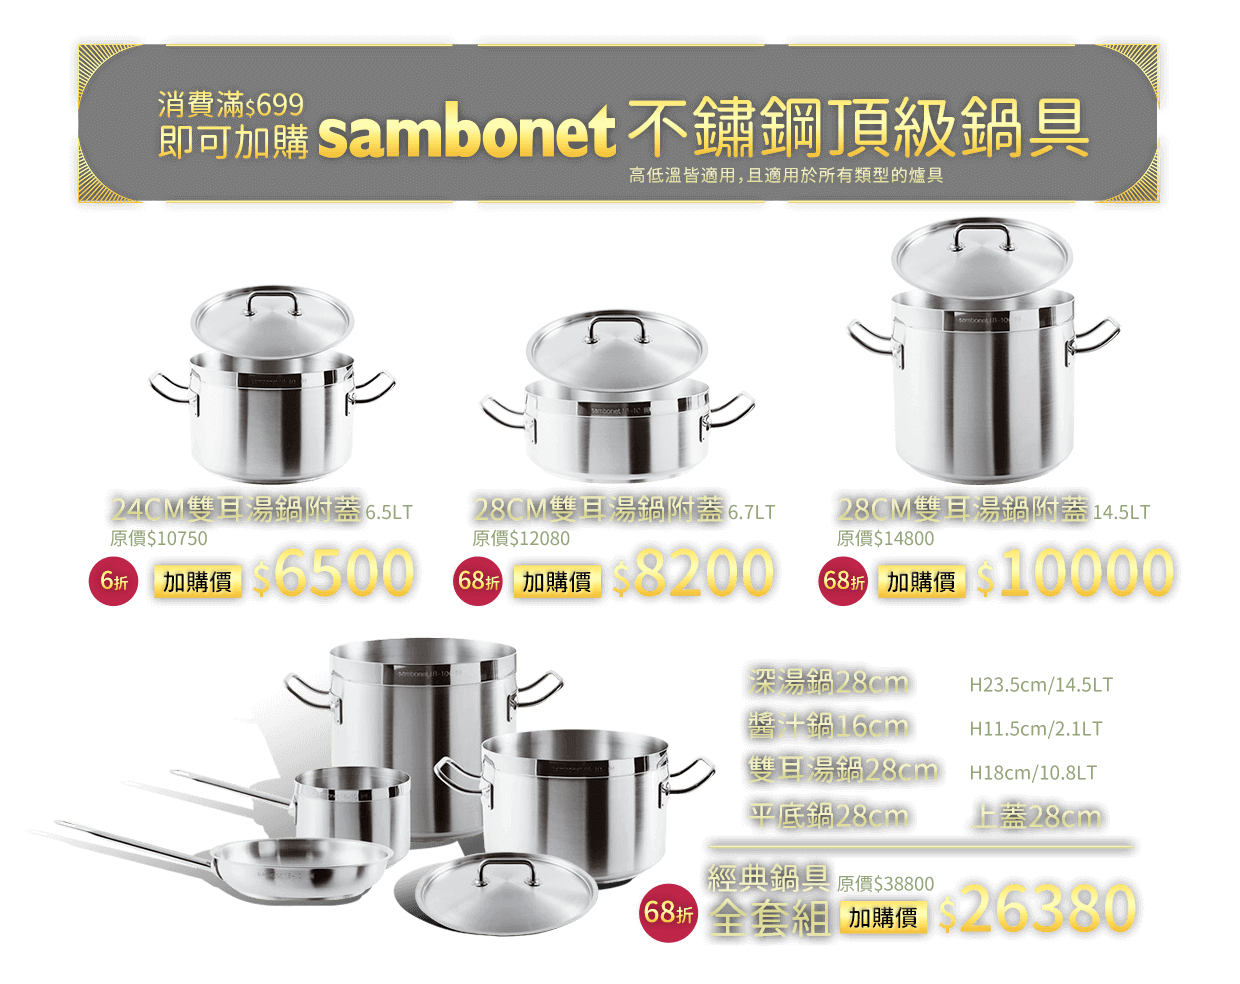 Sambonet 不鏽鋼頂級鍋具系列